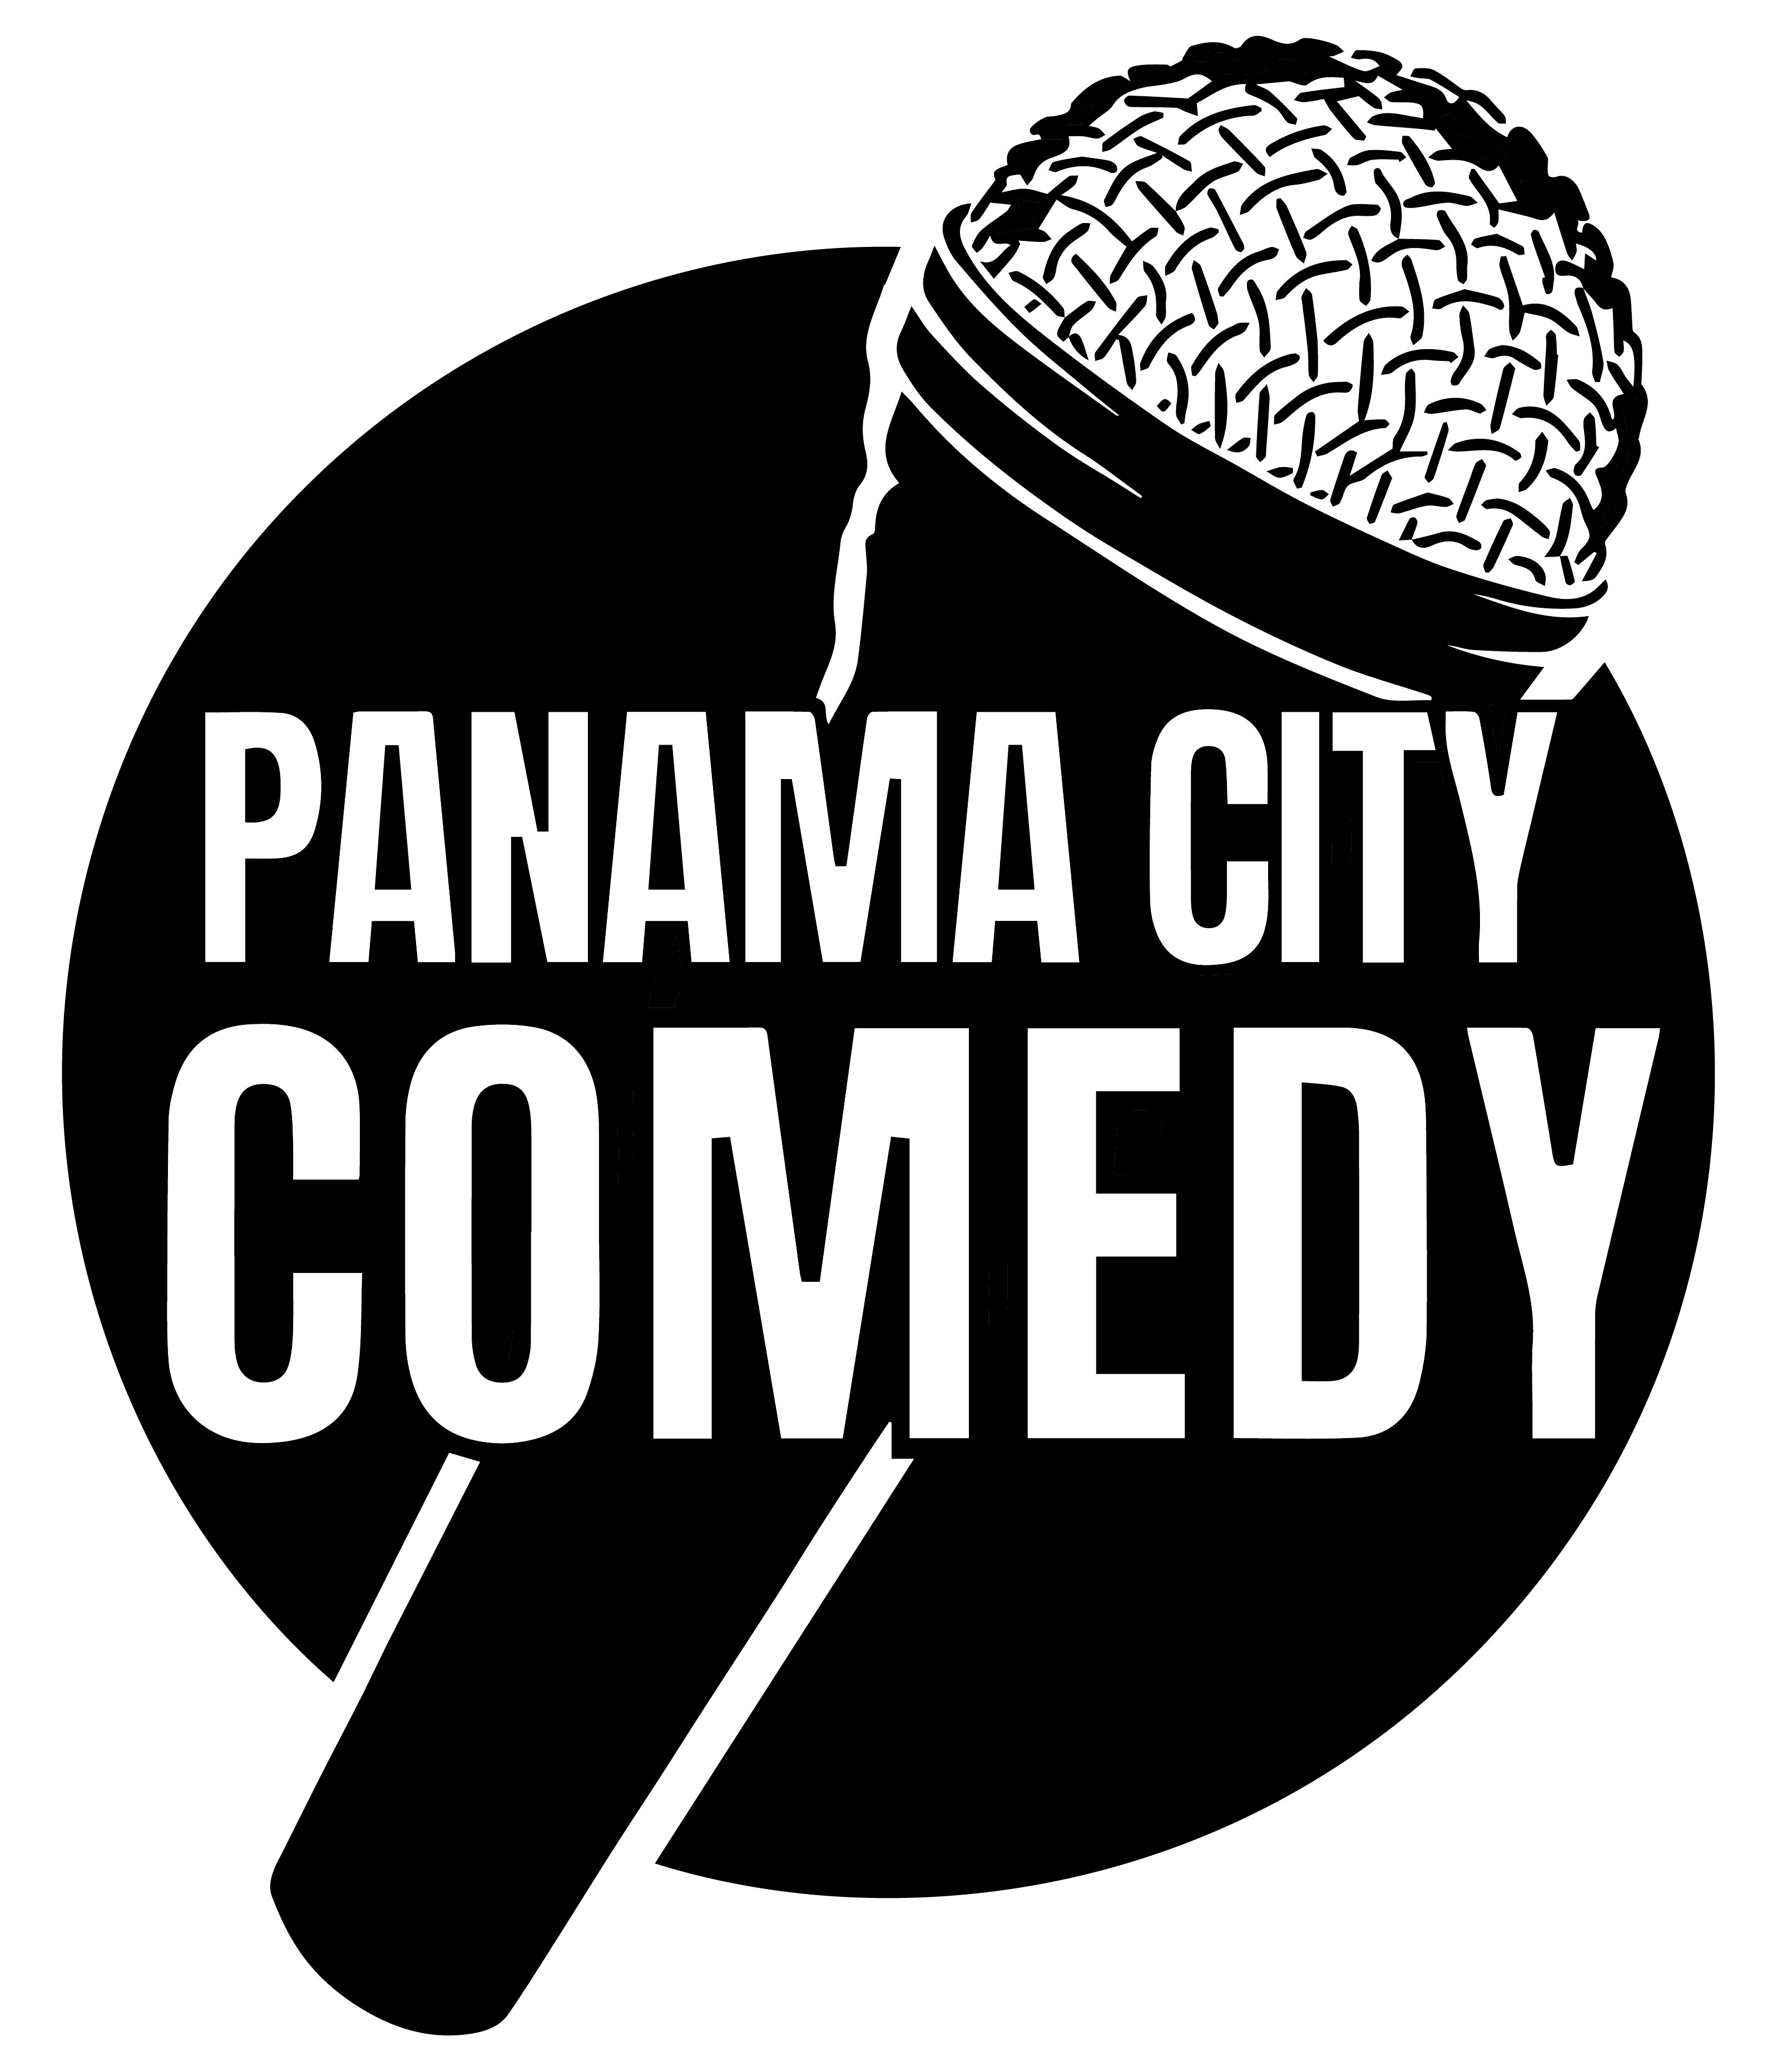 Panama City Comedy